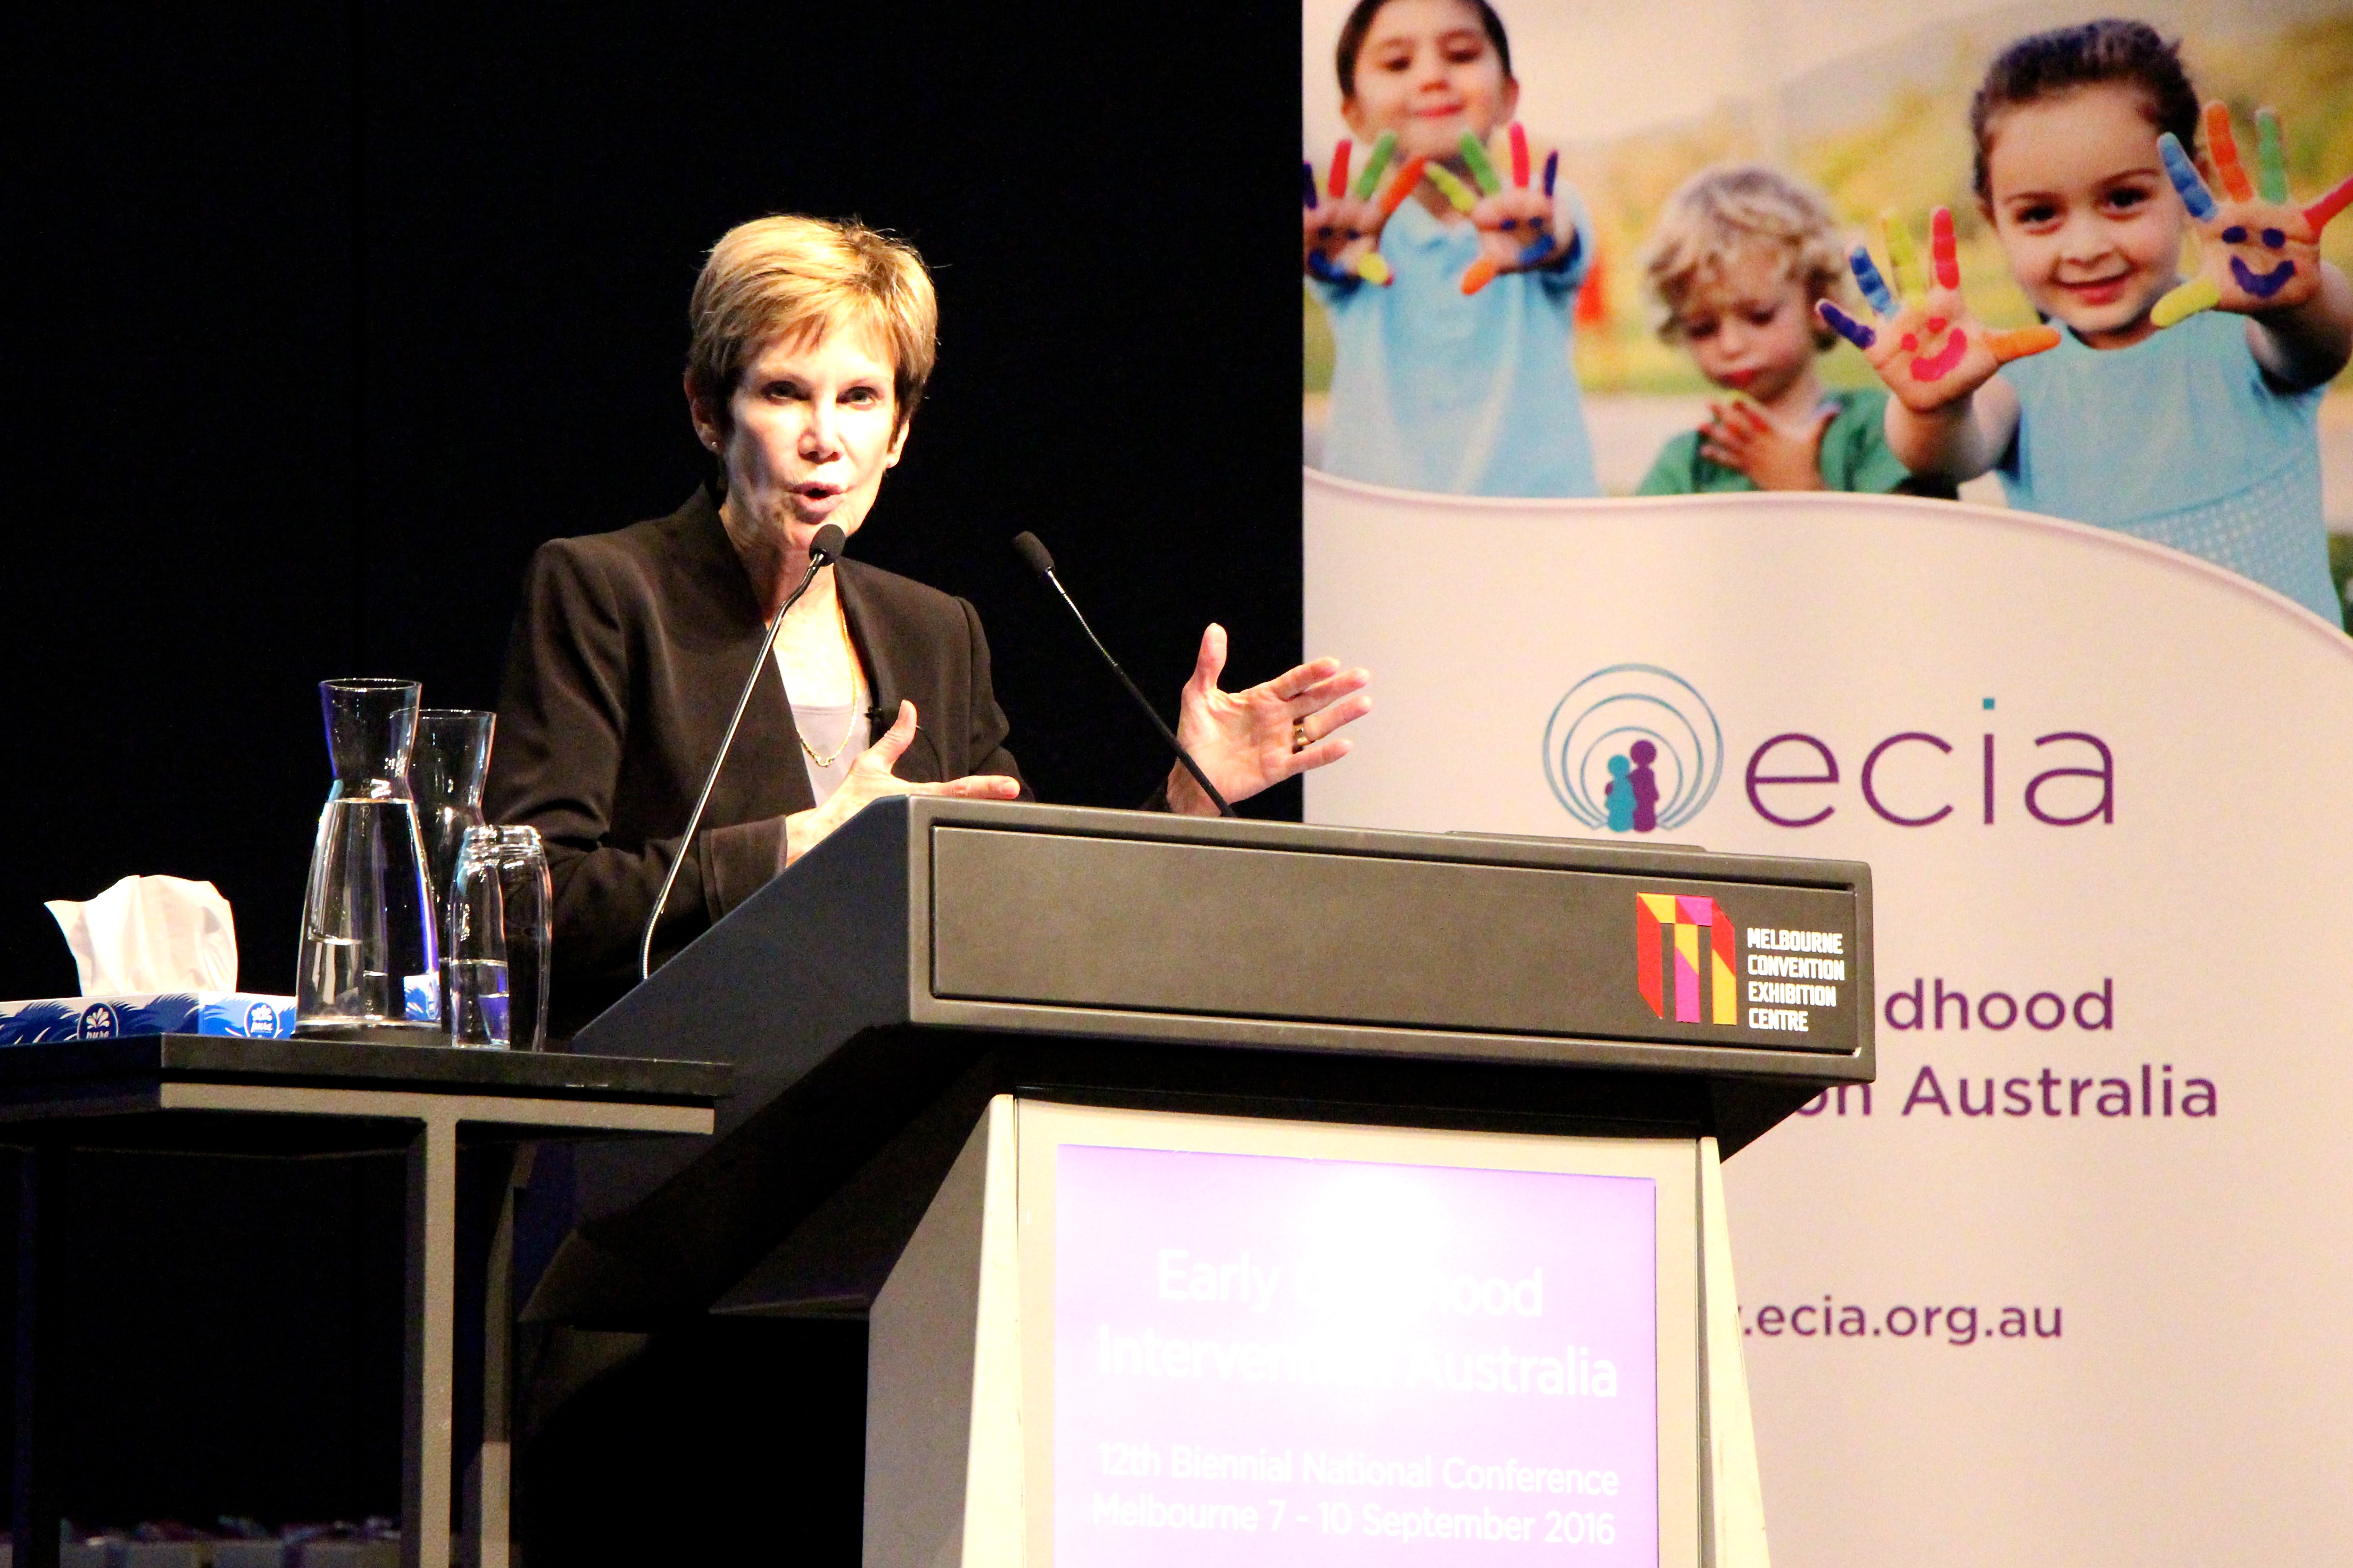 Anita Zucker Center Faculty Delivers Keynote Speech on Early Childhood Intervention in Australia